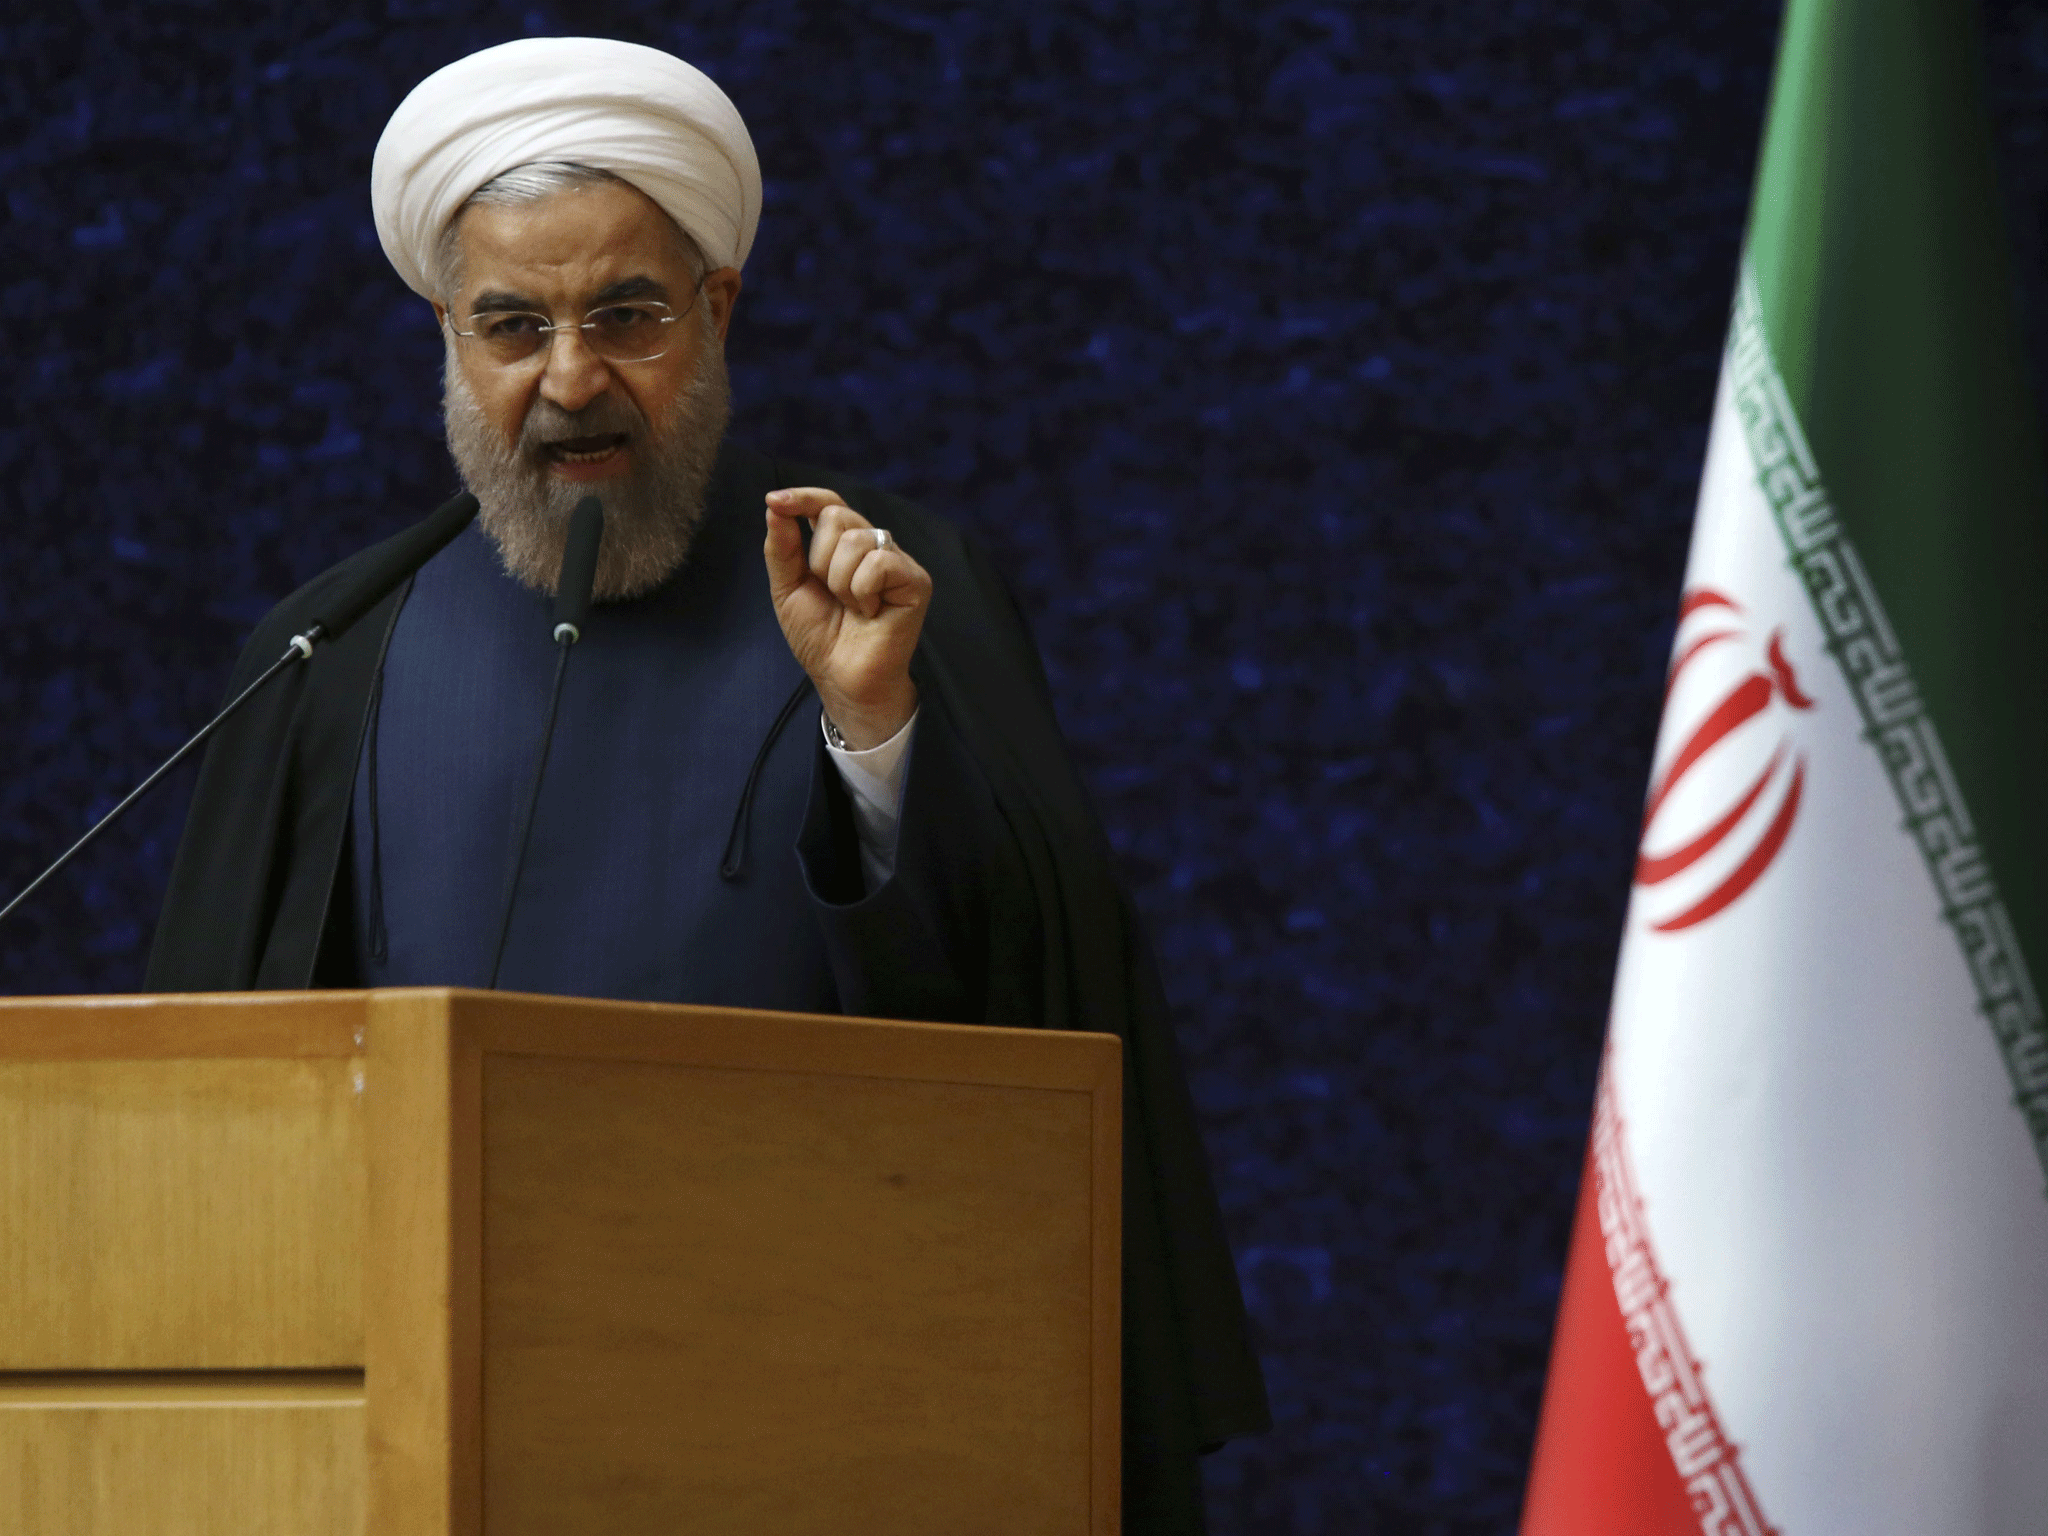 21st century belongs to Asia: President Rouhani